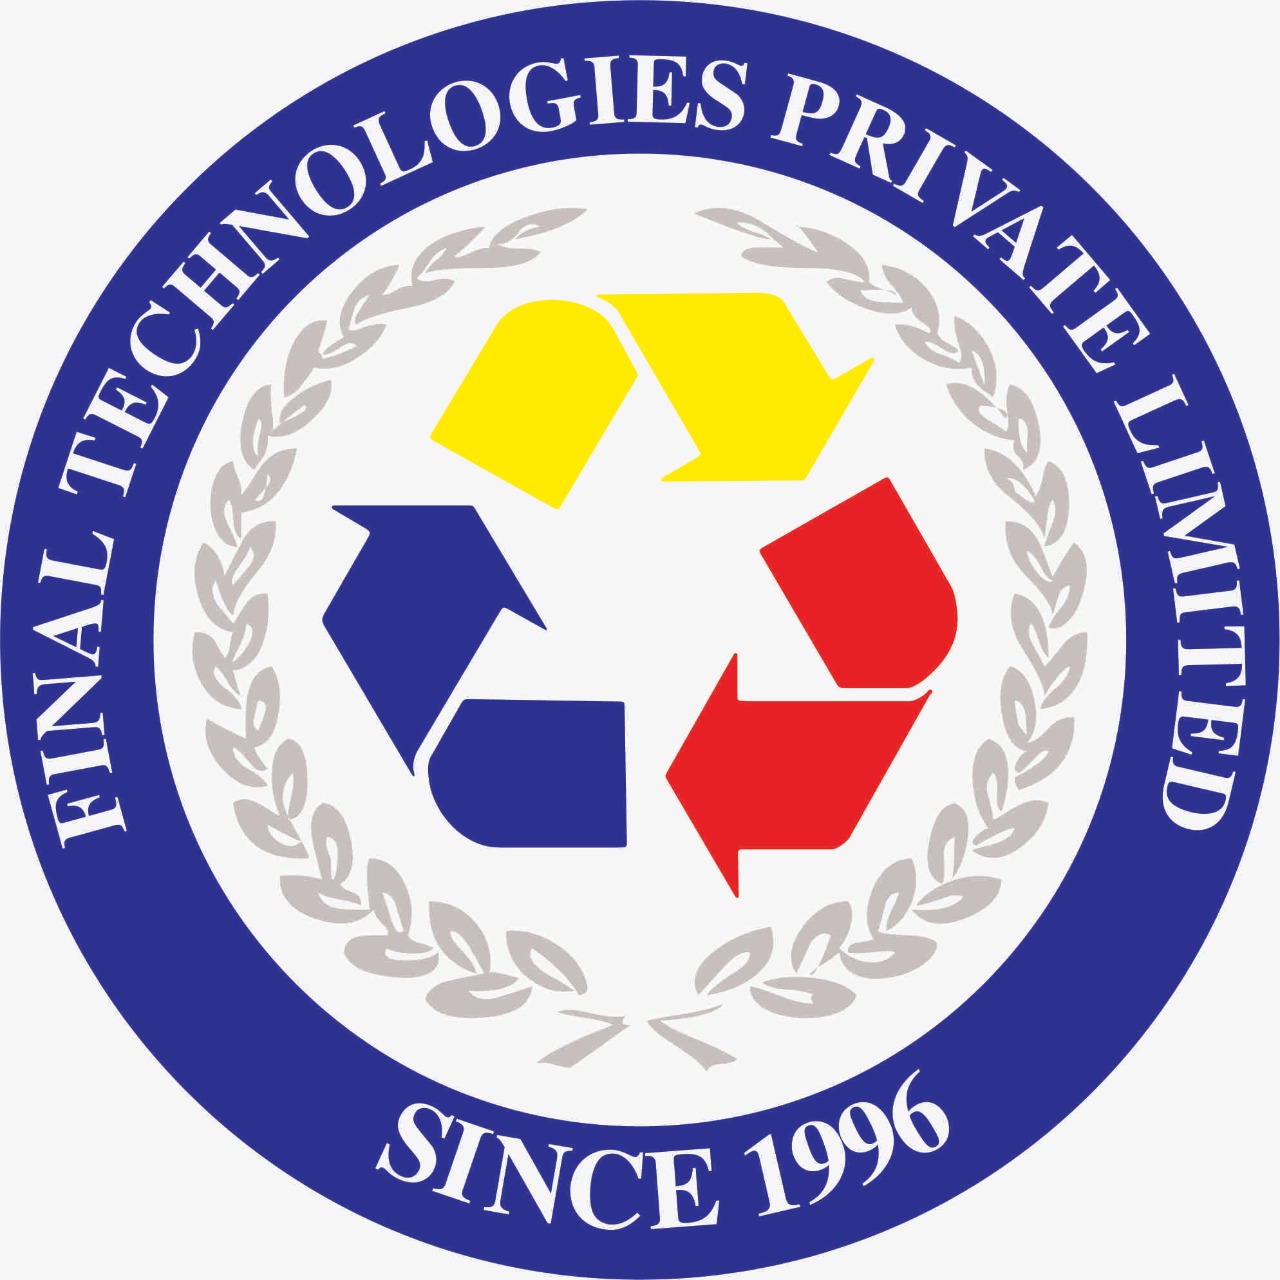 FINAL TECHNOLOGIES PVT. LTD.